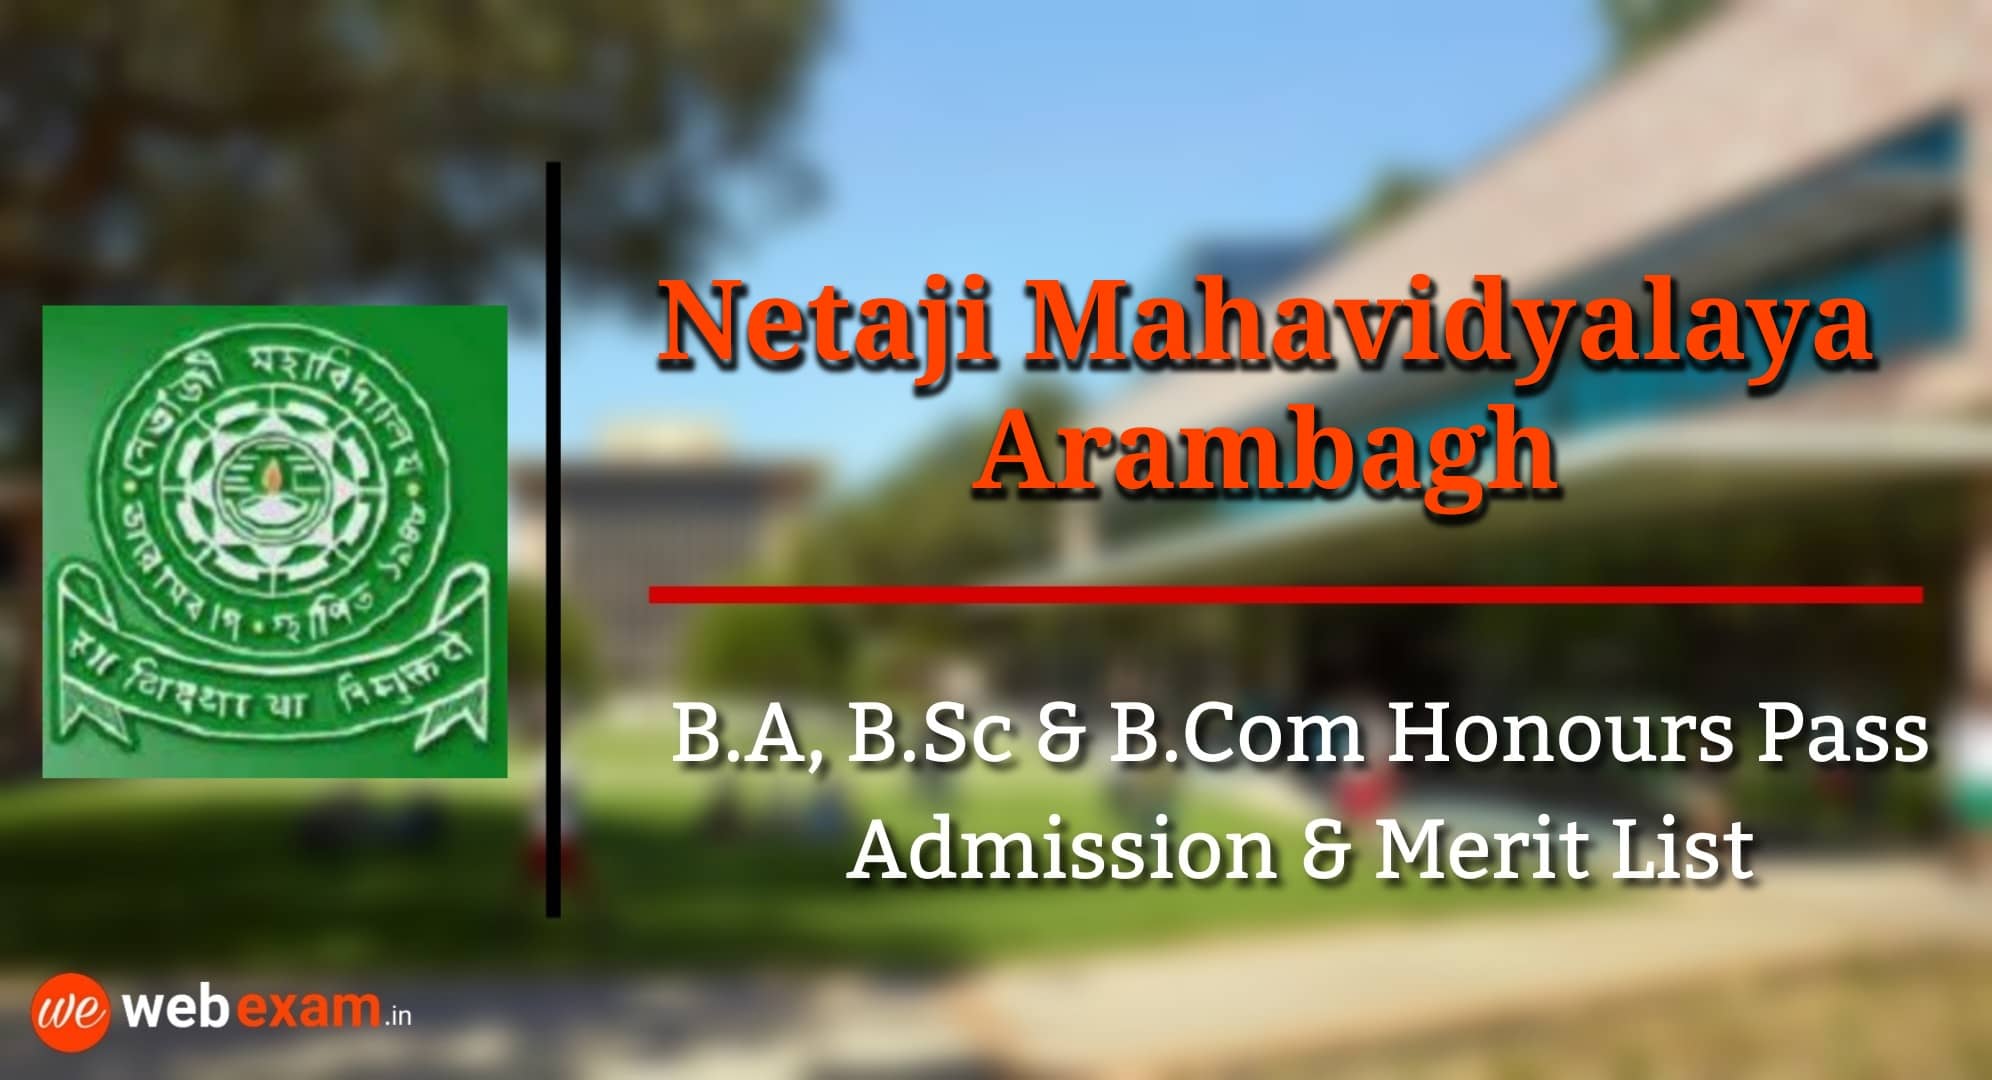 Netaji Mahavidyalaya Admission & Merit List Download